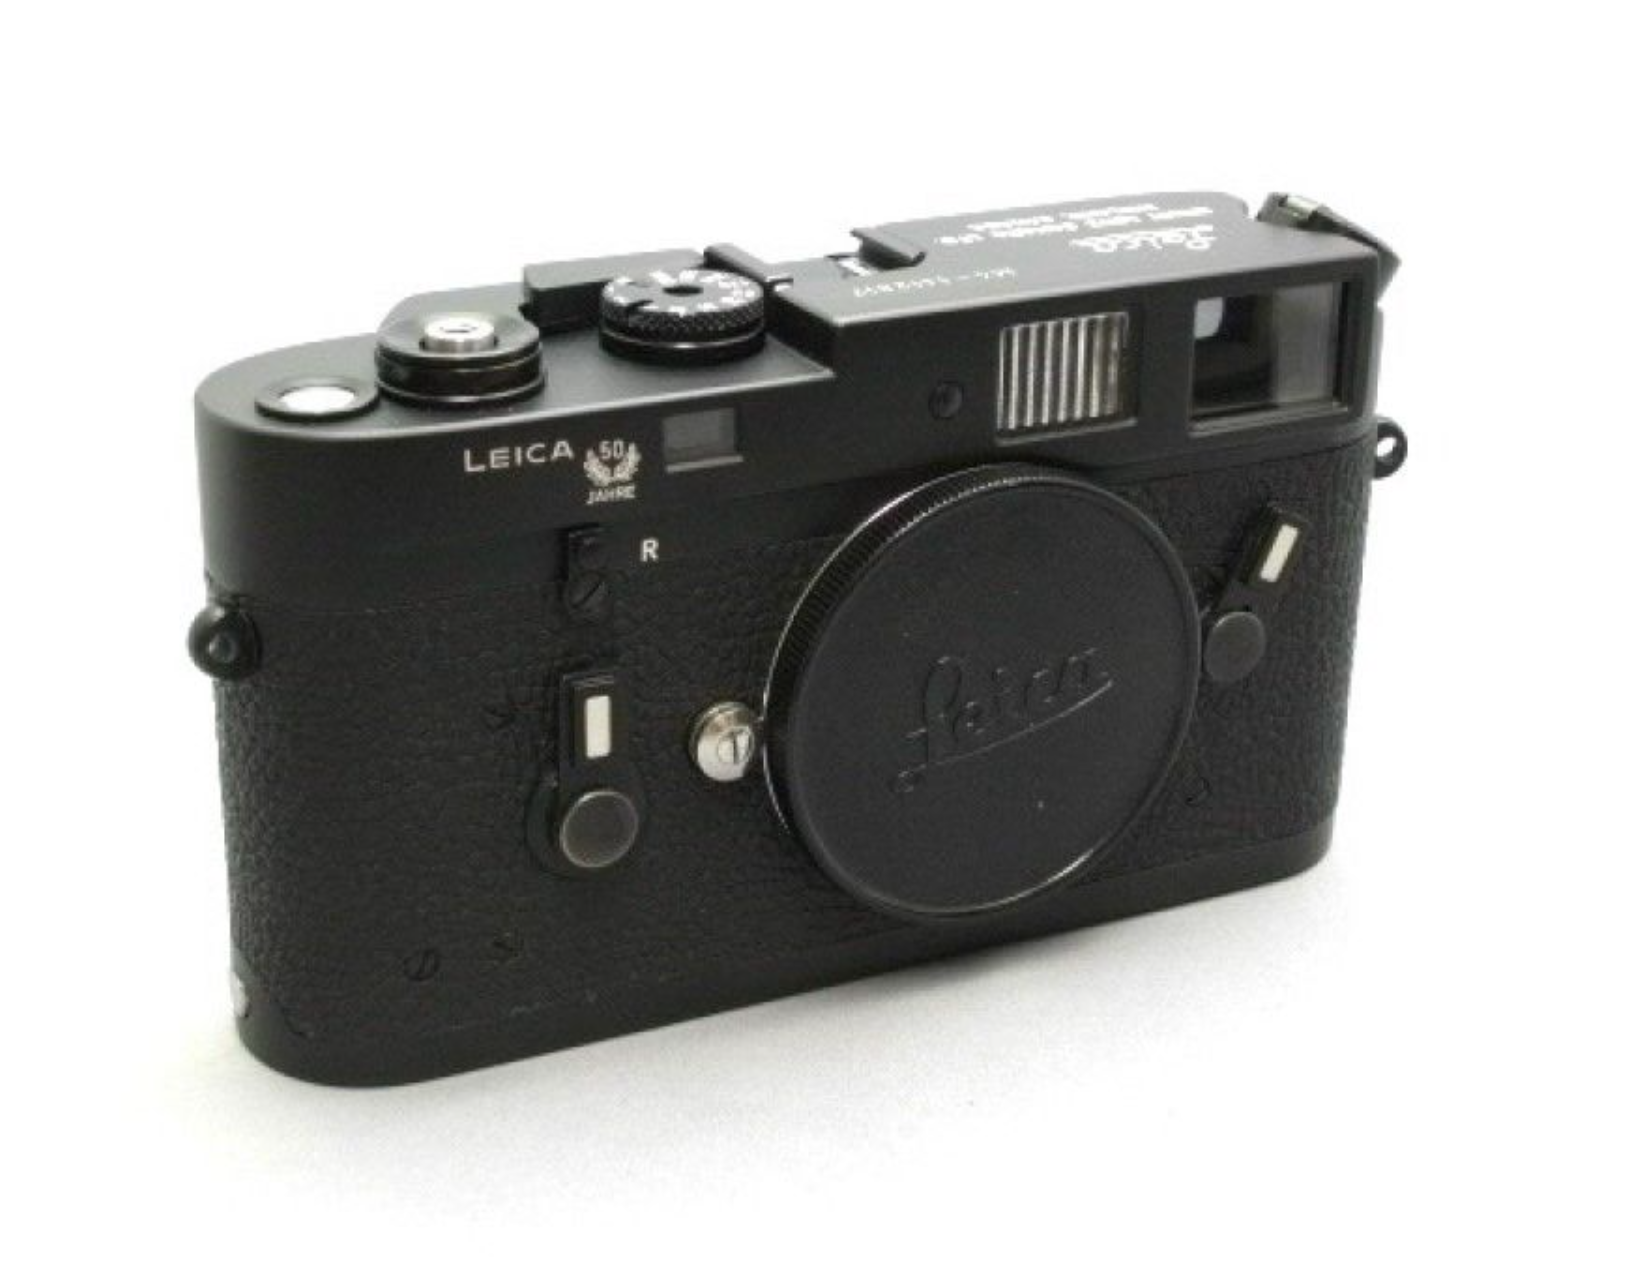 Leica-M4-black-50-Jahre-300x300.PNG